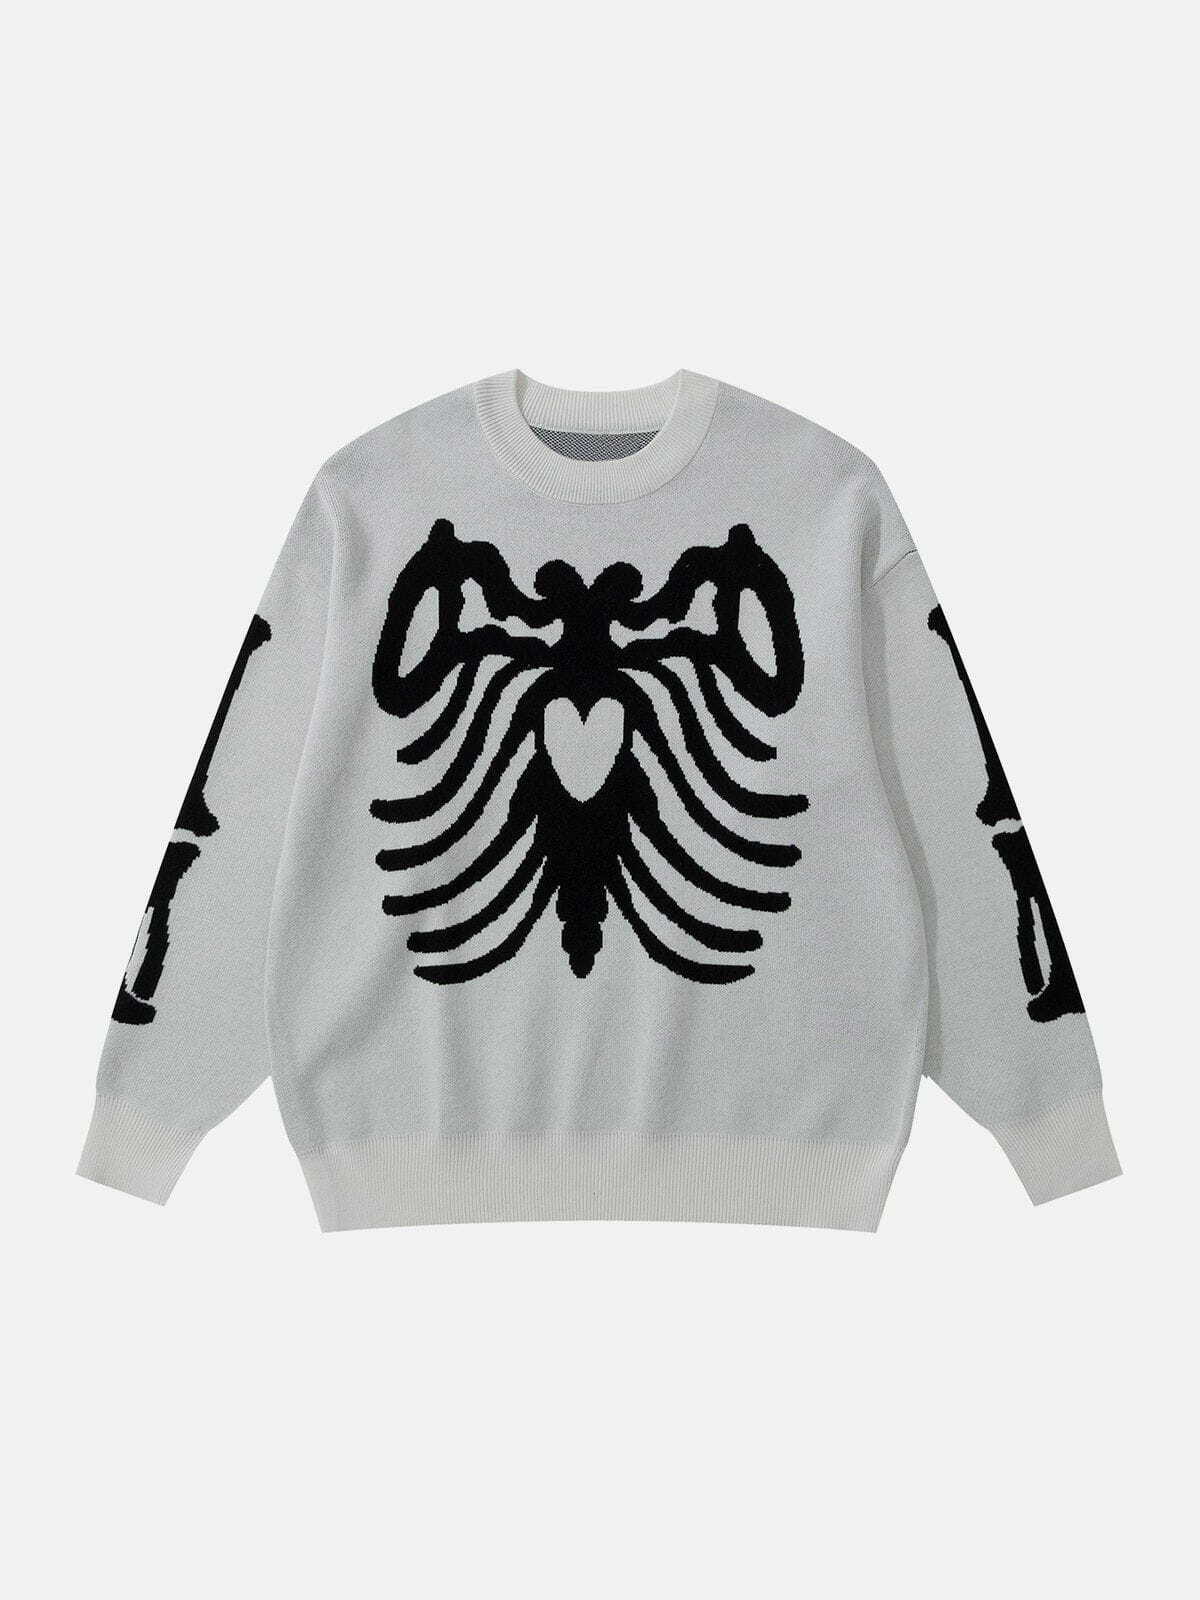 spider jacquard sweater edgy urban knitwear 6777